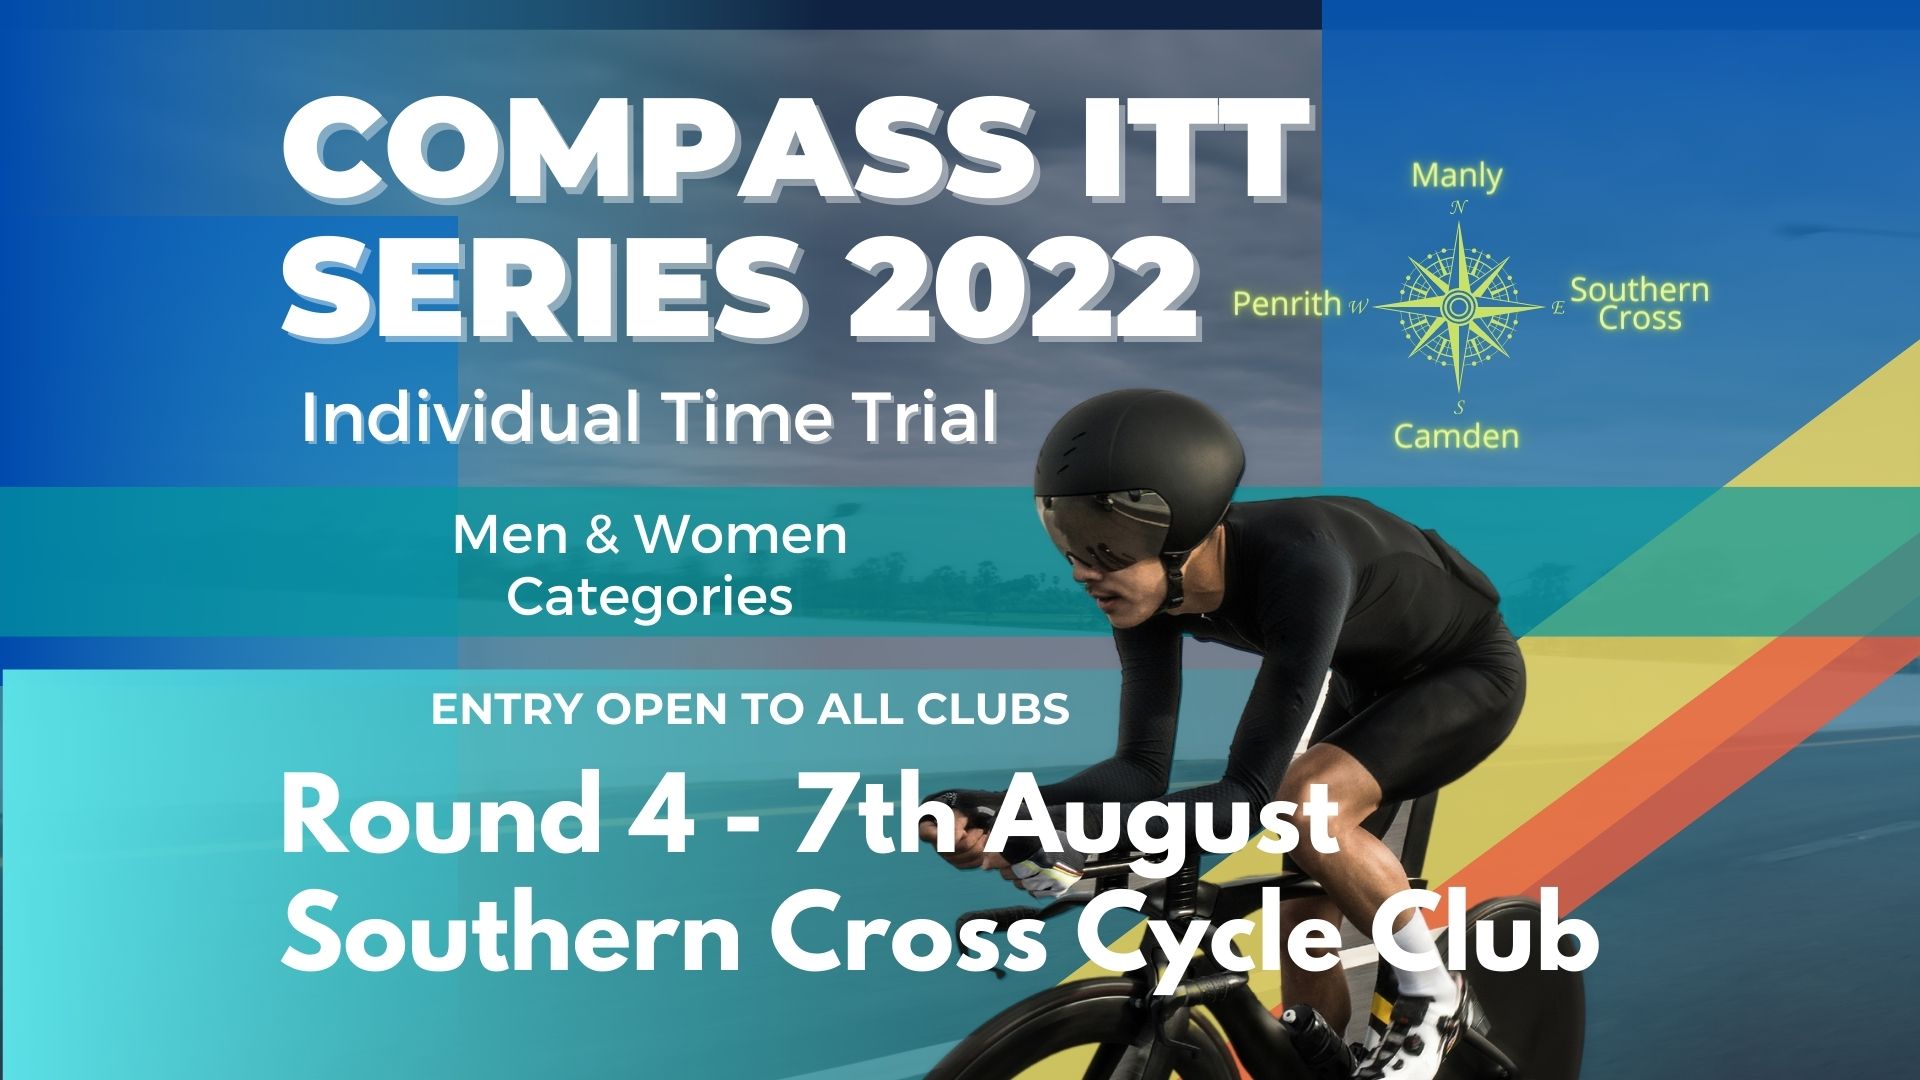 Compass IIT Series Southern Cross